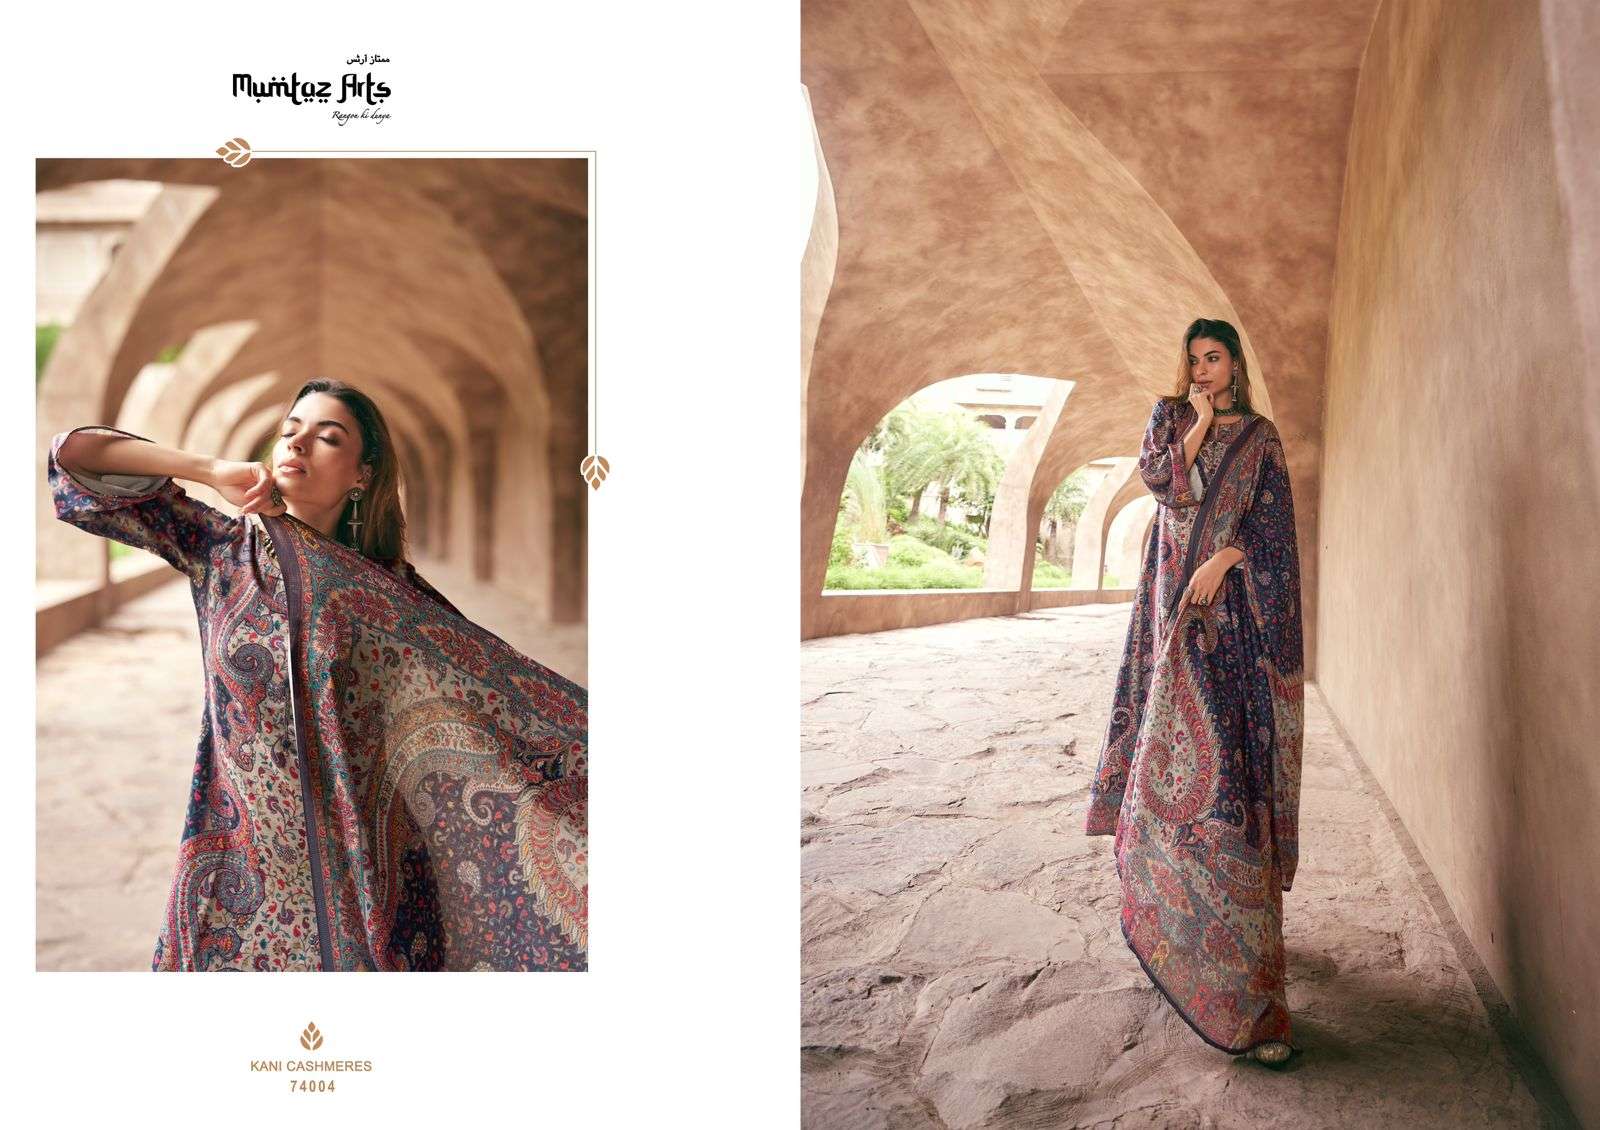 Mumtaz Kani Cashmeres 74001 To 74007 Dress Material Wholesale catalog